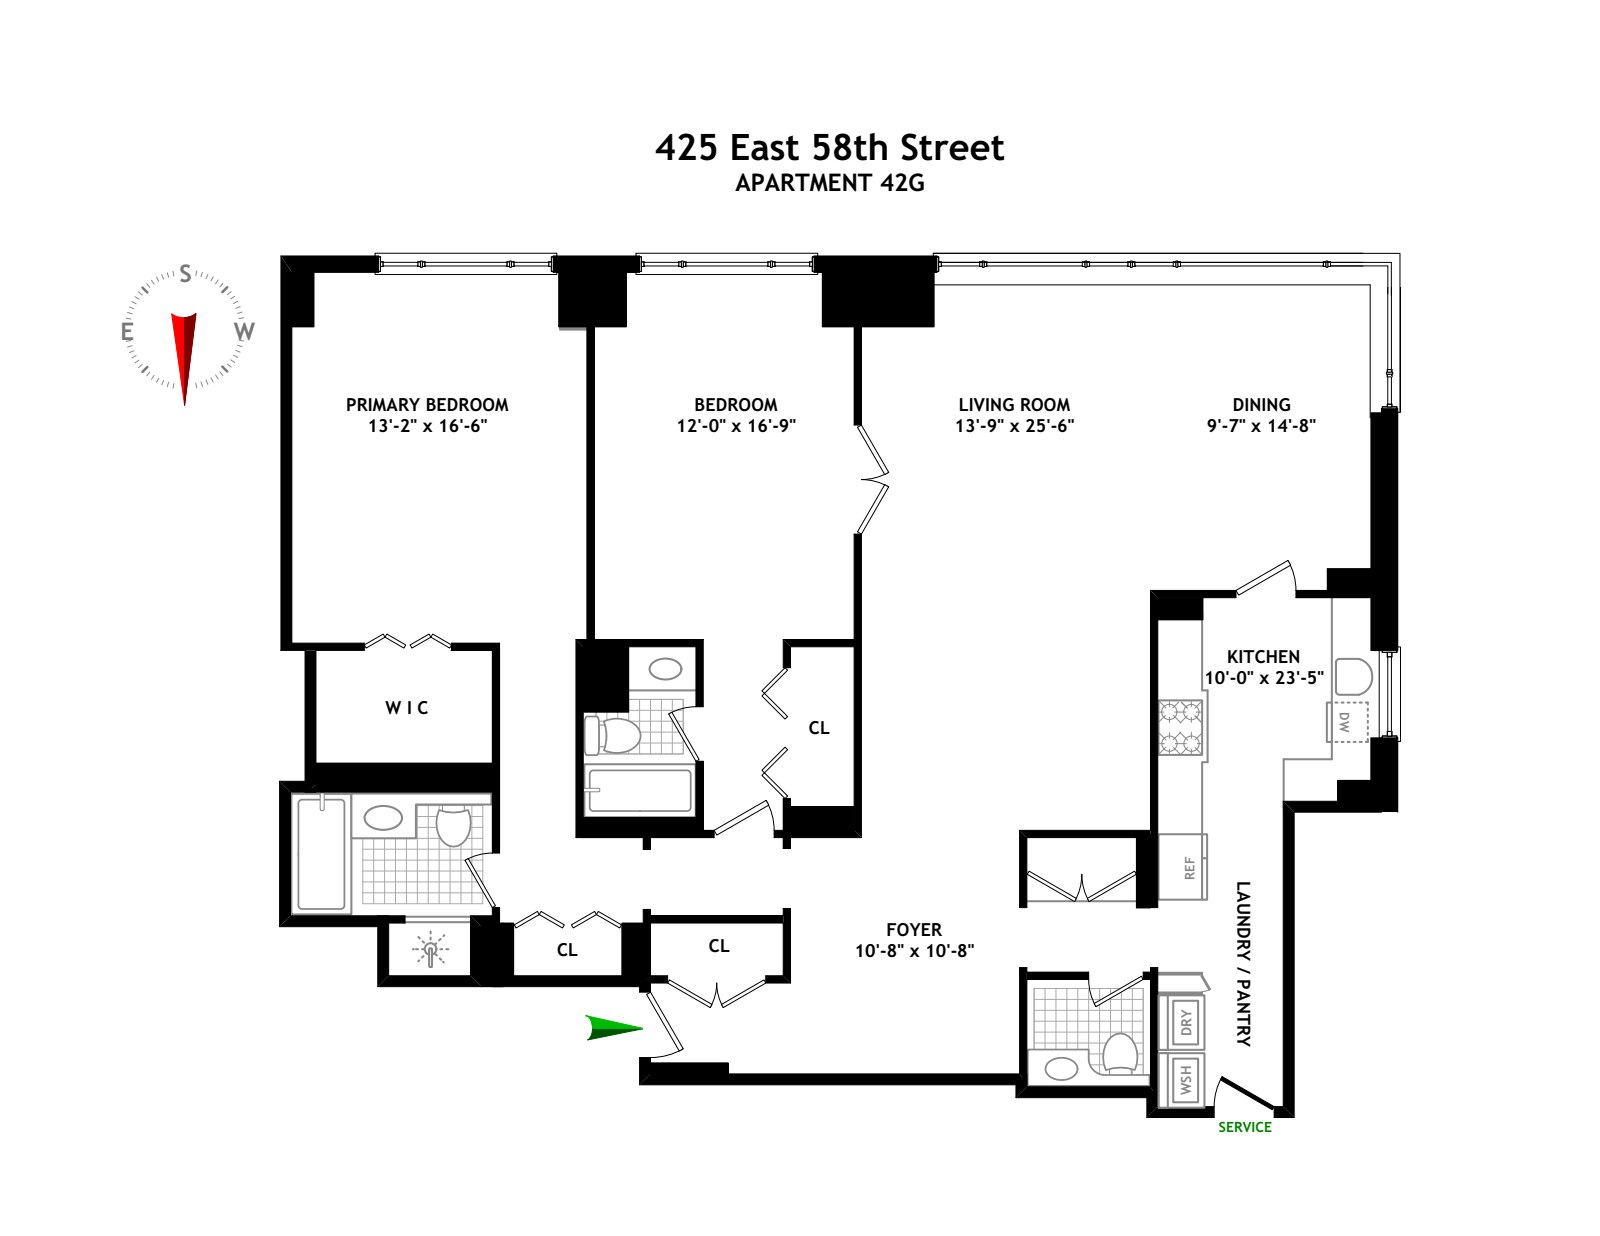 Floorplan for 425 East 58th Street, 42G